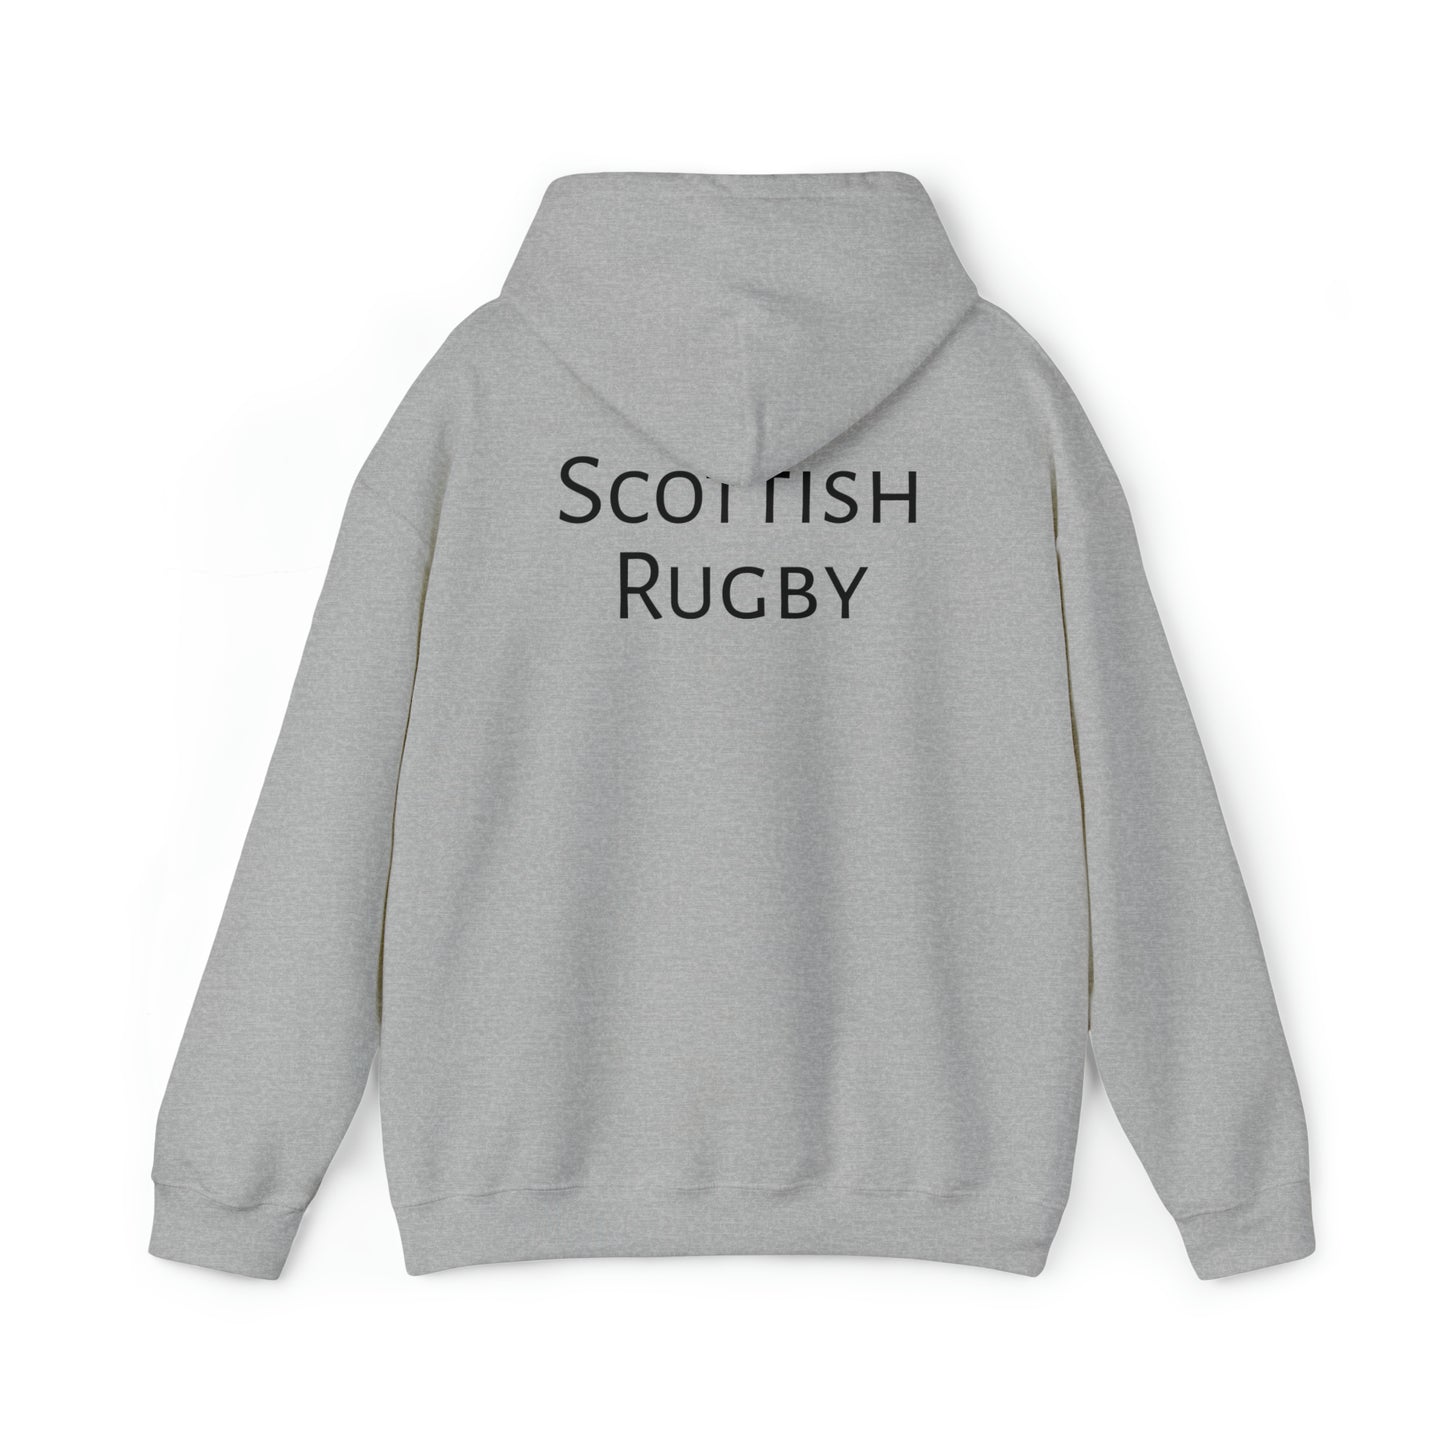 Ready Scotland - light hoodies